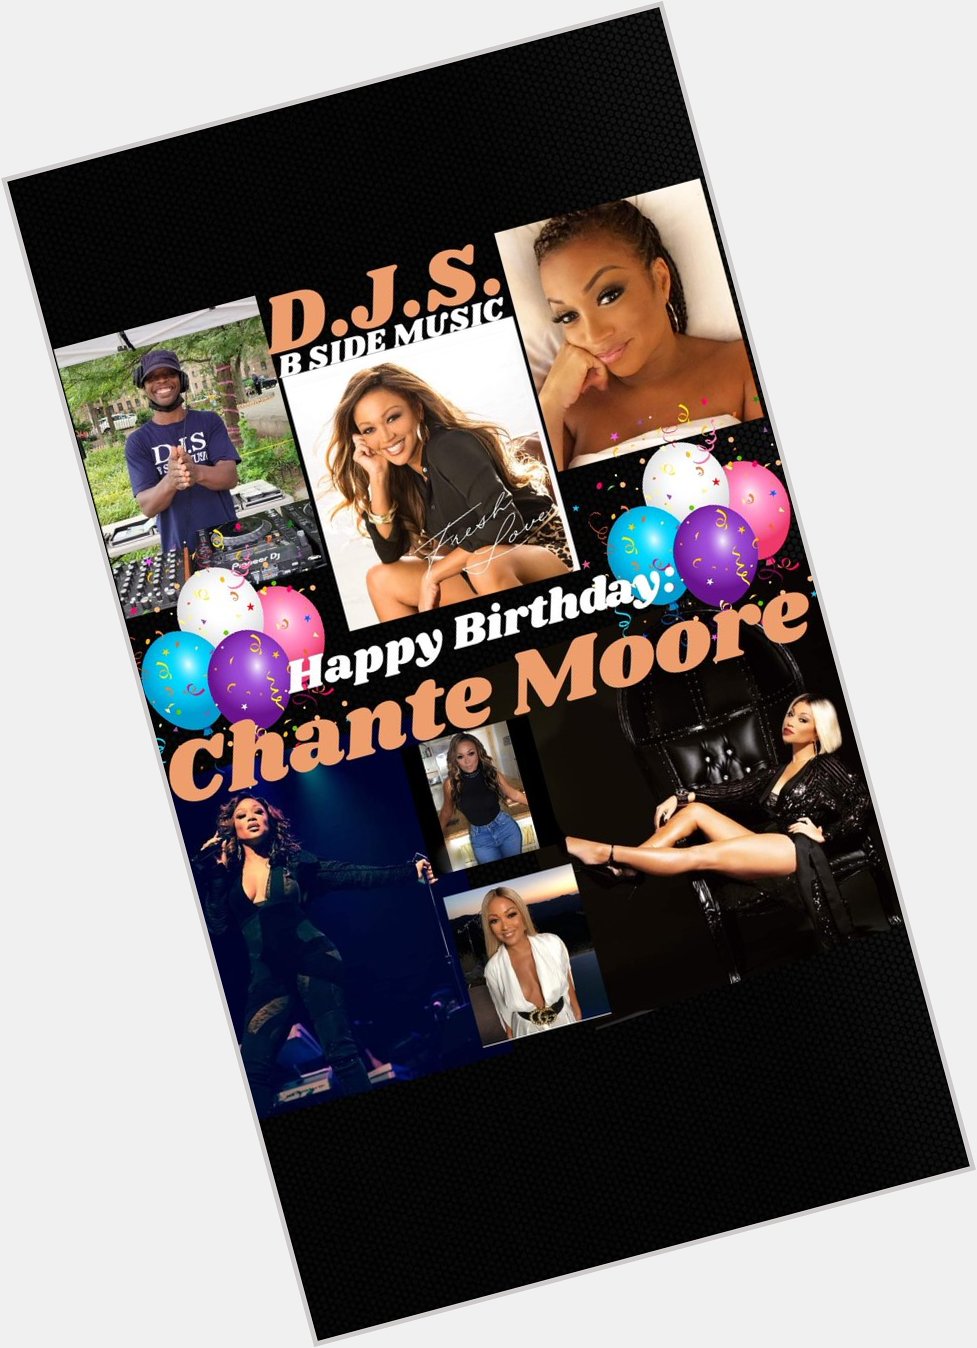 I(D.J.S.)\"B SIDE MUSIC wish Singer: \"CHANTE MOORE\" Happy Birthday!!! 